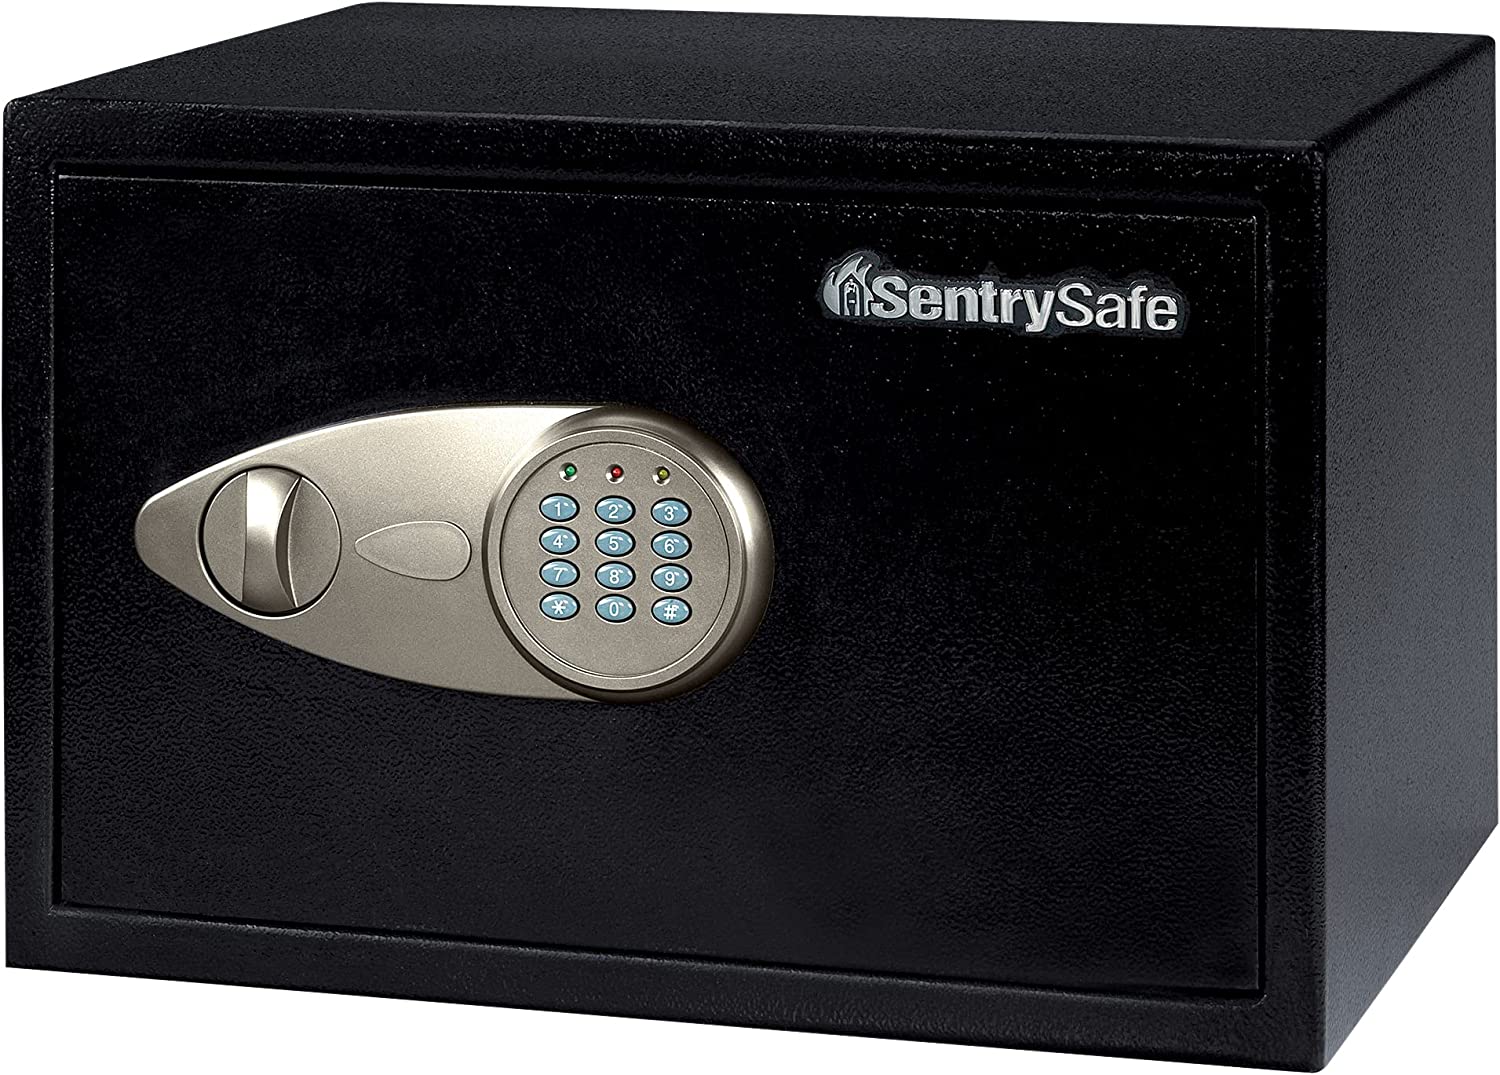 Sentry Safe X055 16.4L edium Security Safe